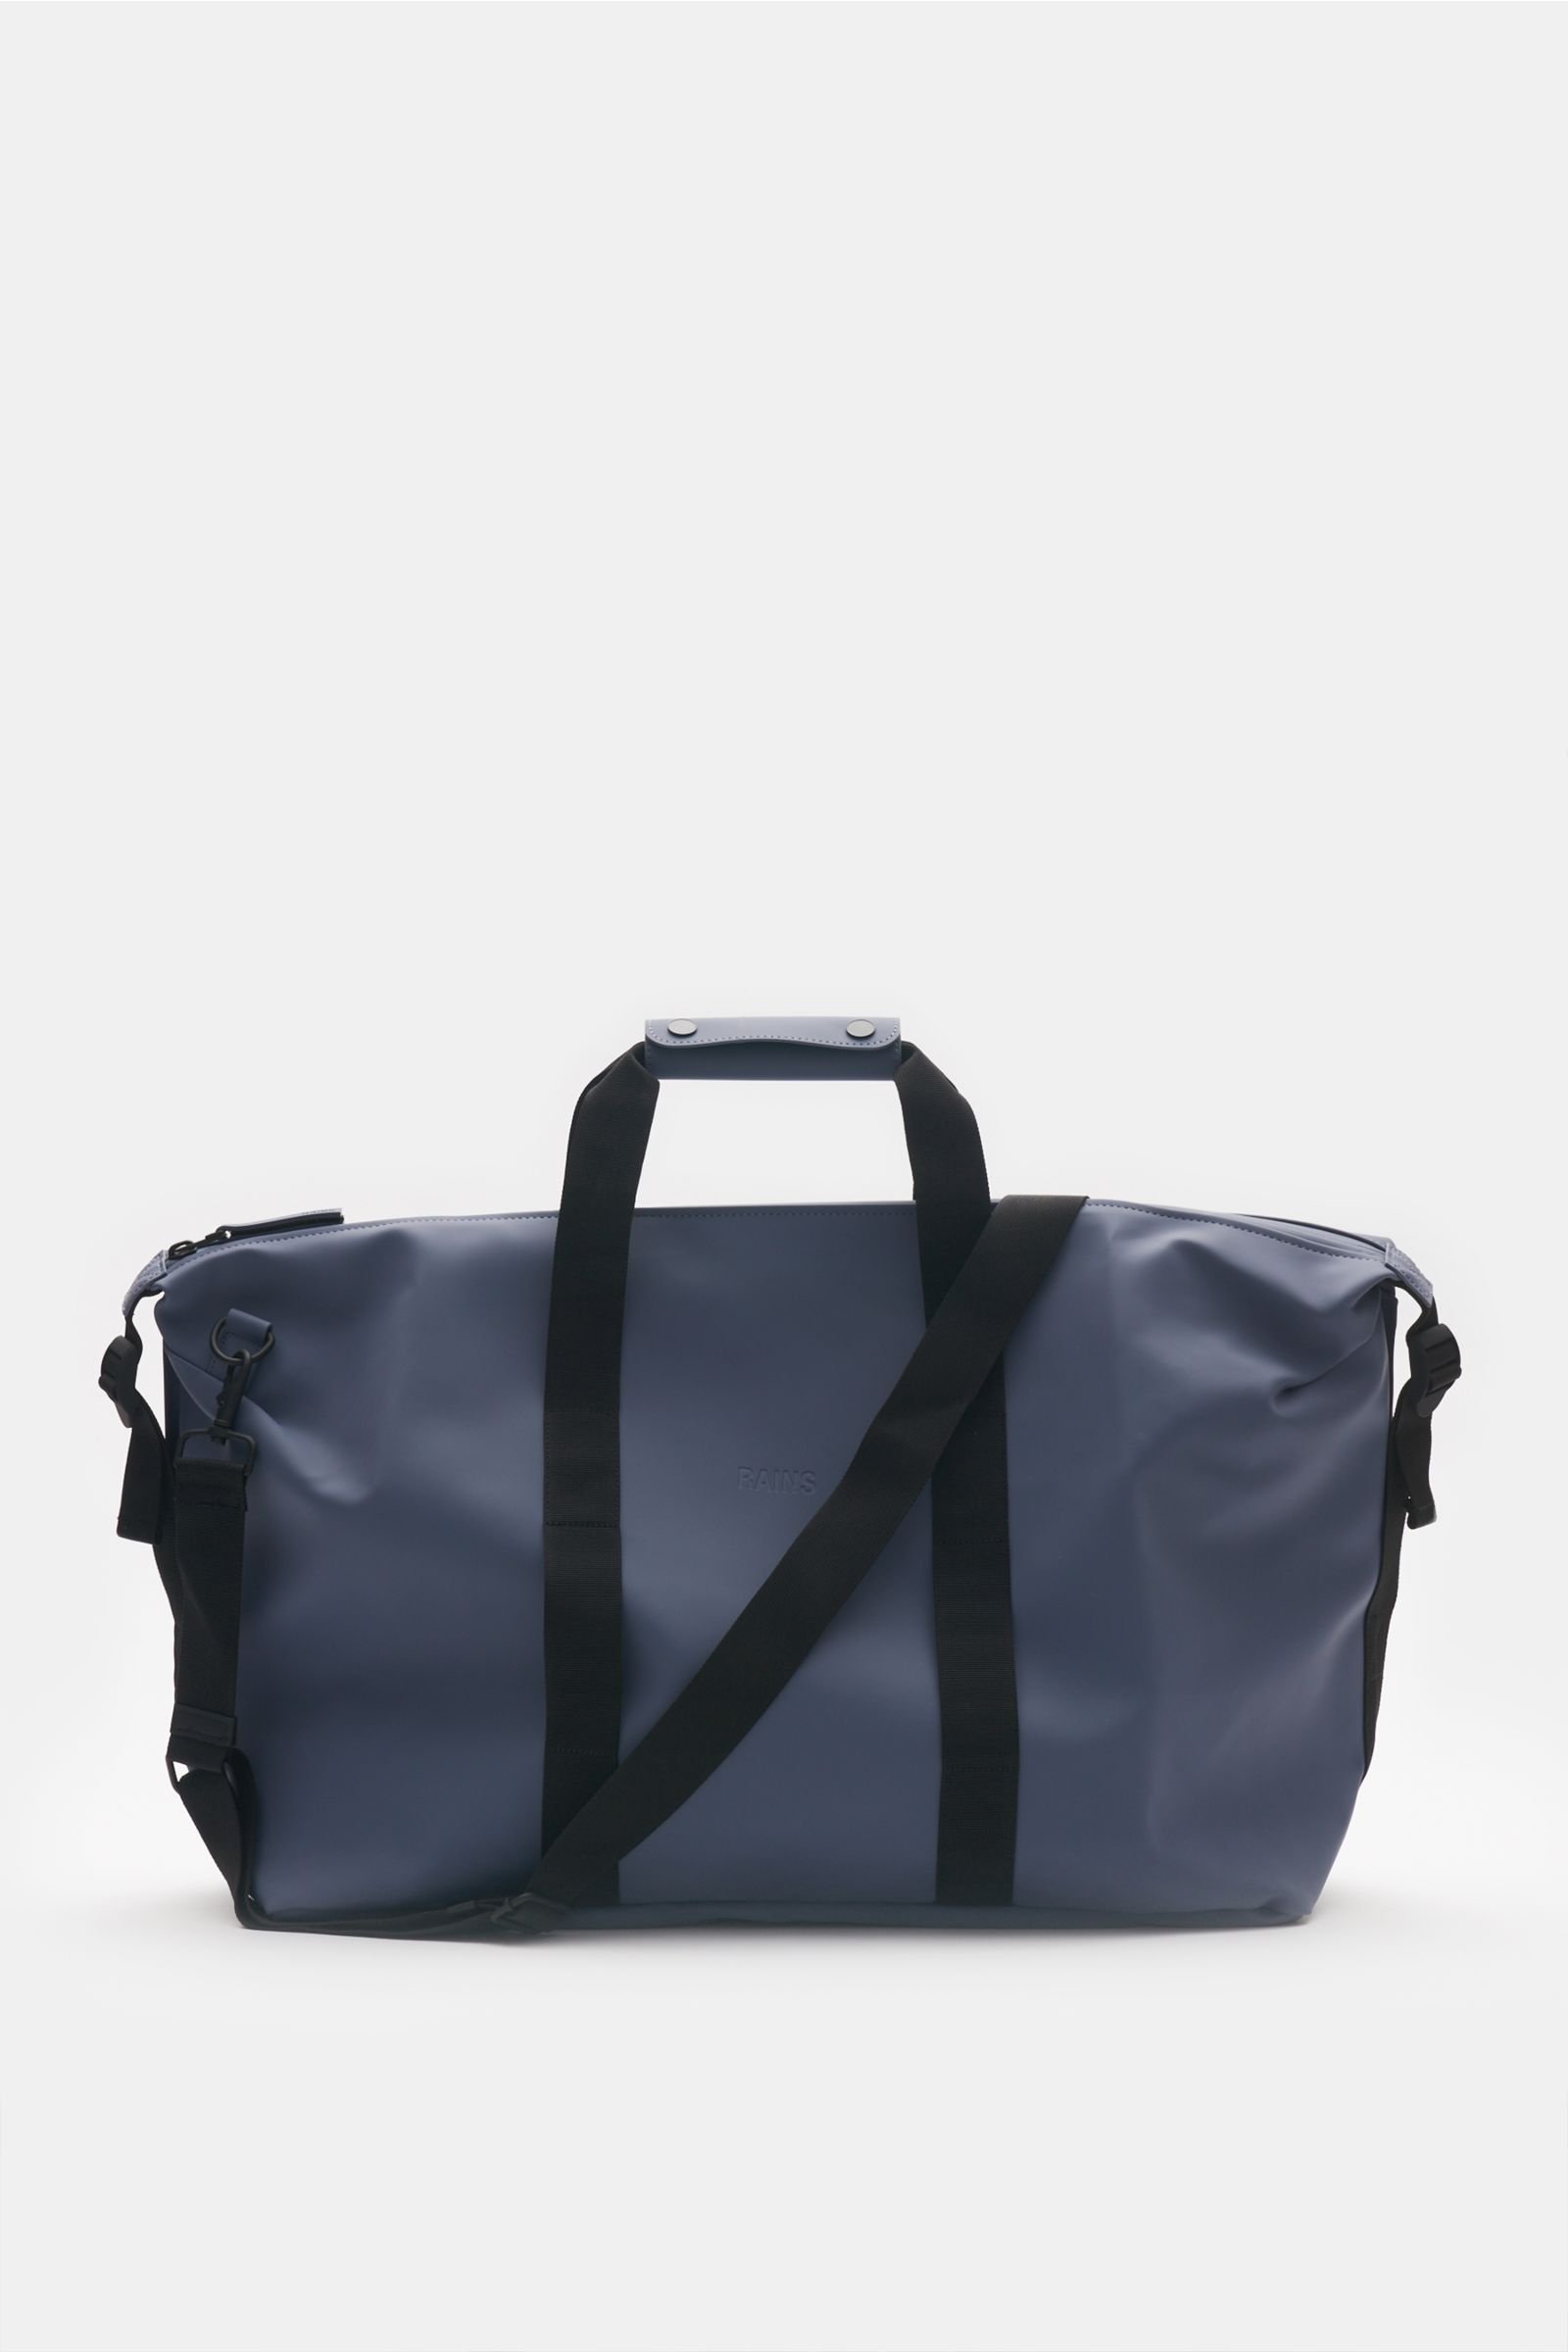 Travel bag 'Weekend Bag' grey-blue